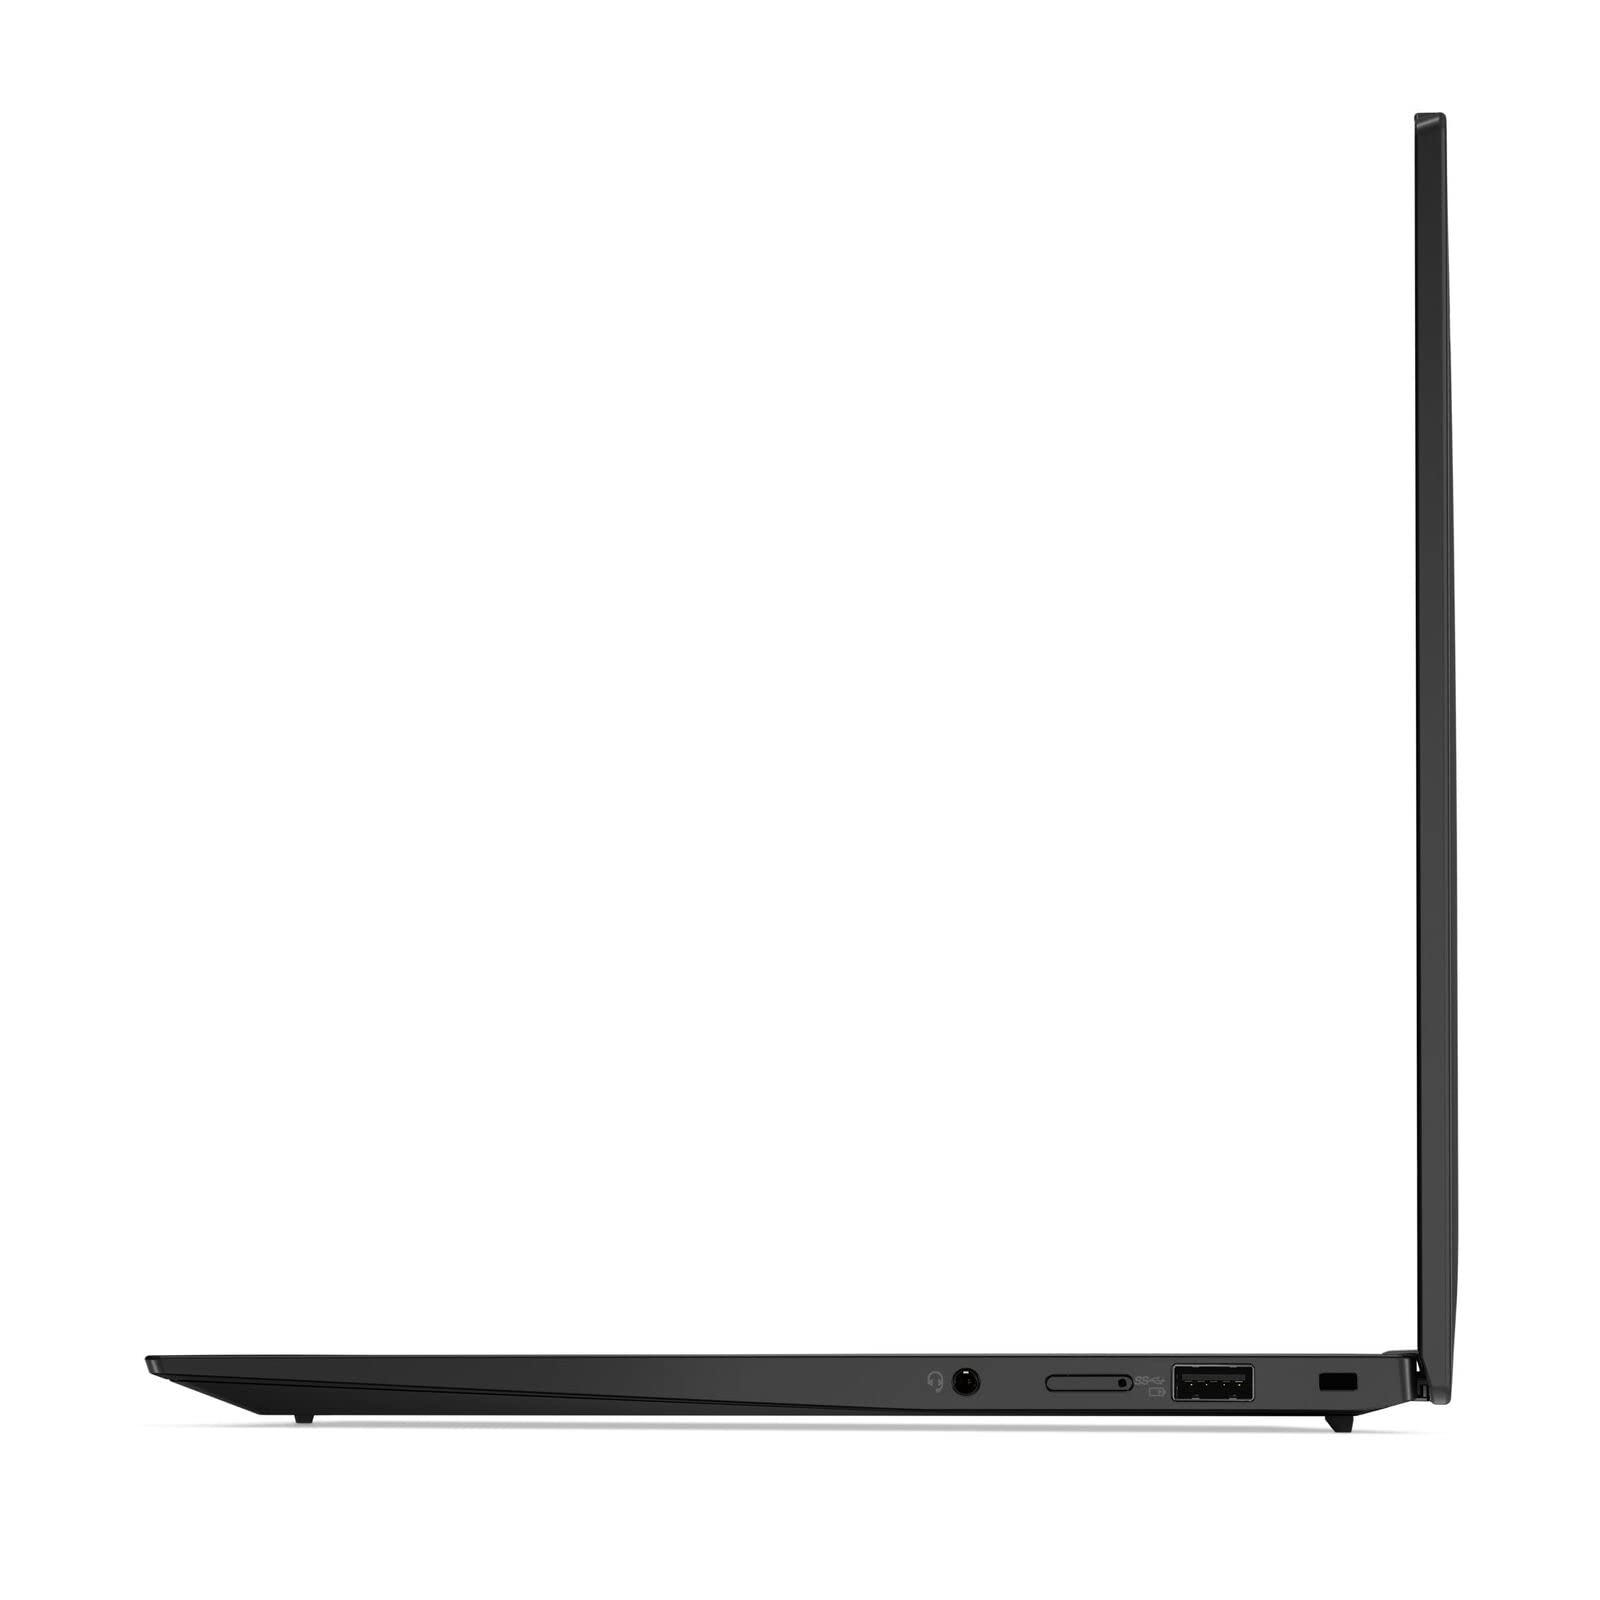 Lenovo ThinkPad X1 Carbon Gen 9, 2TB NVMe 14” Laptop - i7-1185G7 (4 Cores, 4.8Hz), 16GB RAM, WIFI 6 & BT 5.2, Intel vPro, Fingerprint Reader, Free Windows 11 pro upgrade, UK Backlit Keyboard